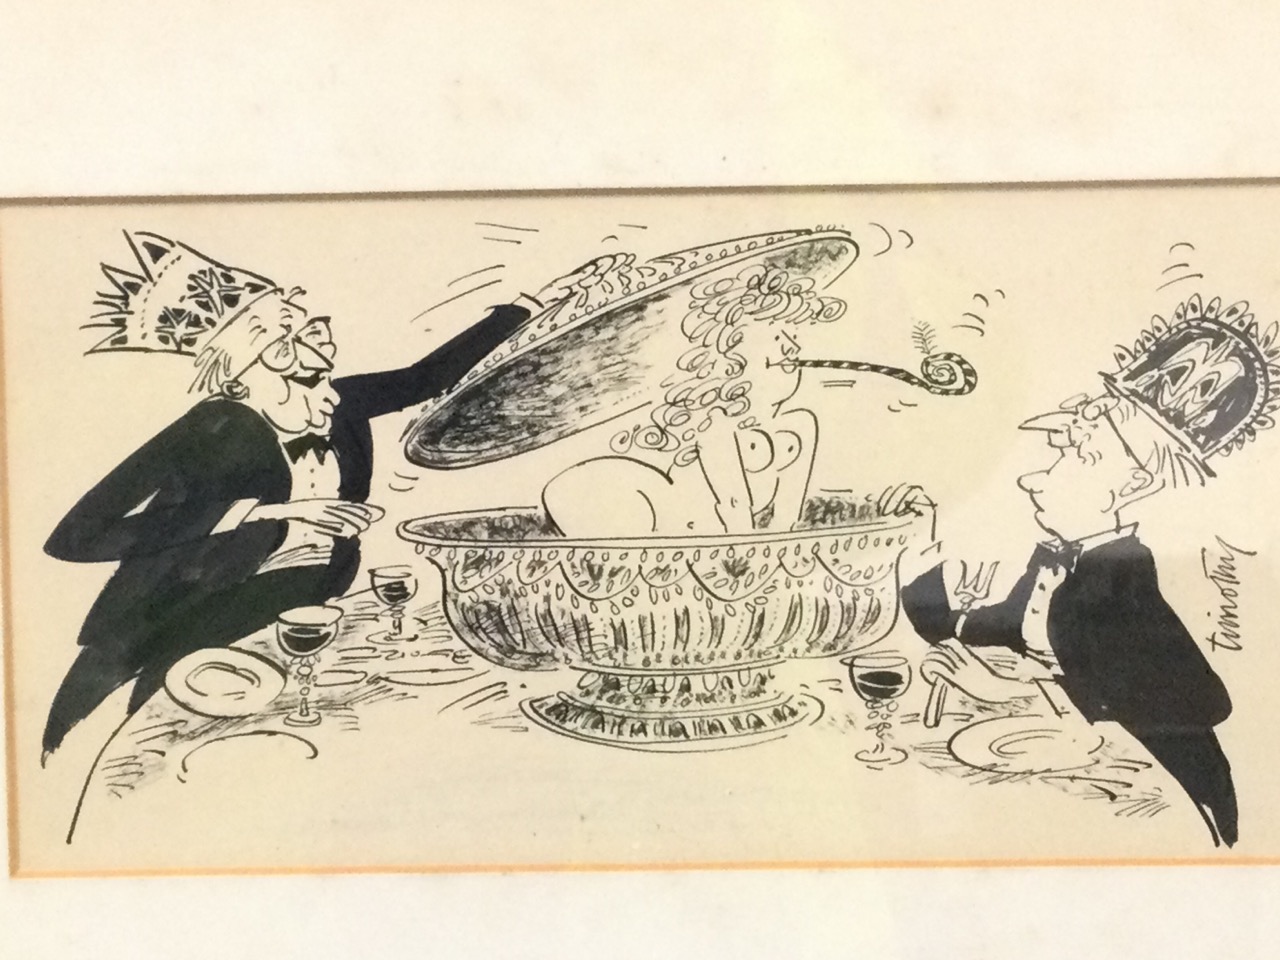 Timothy Birdsall (Sunday Times & Spectator cartoonist), pen and ink, political cartoon depicting